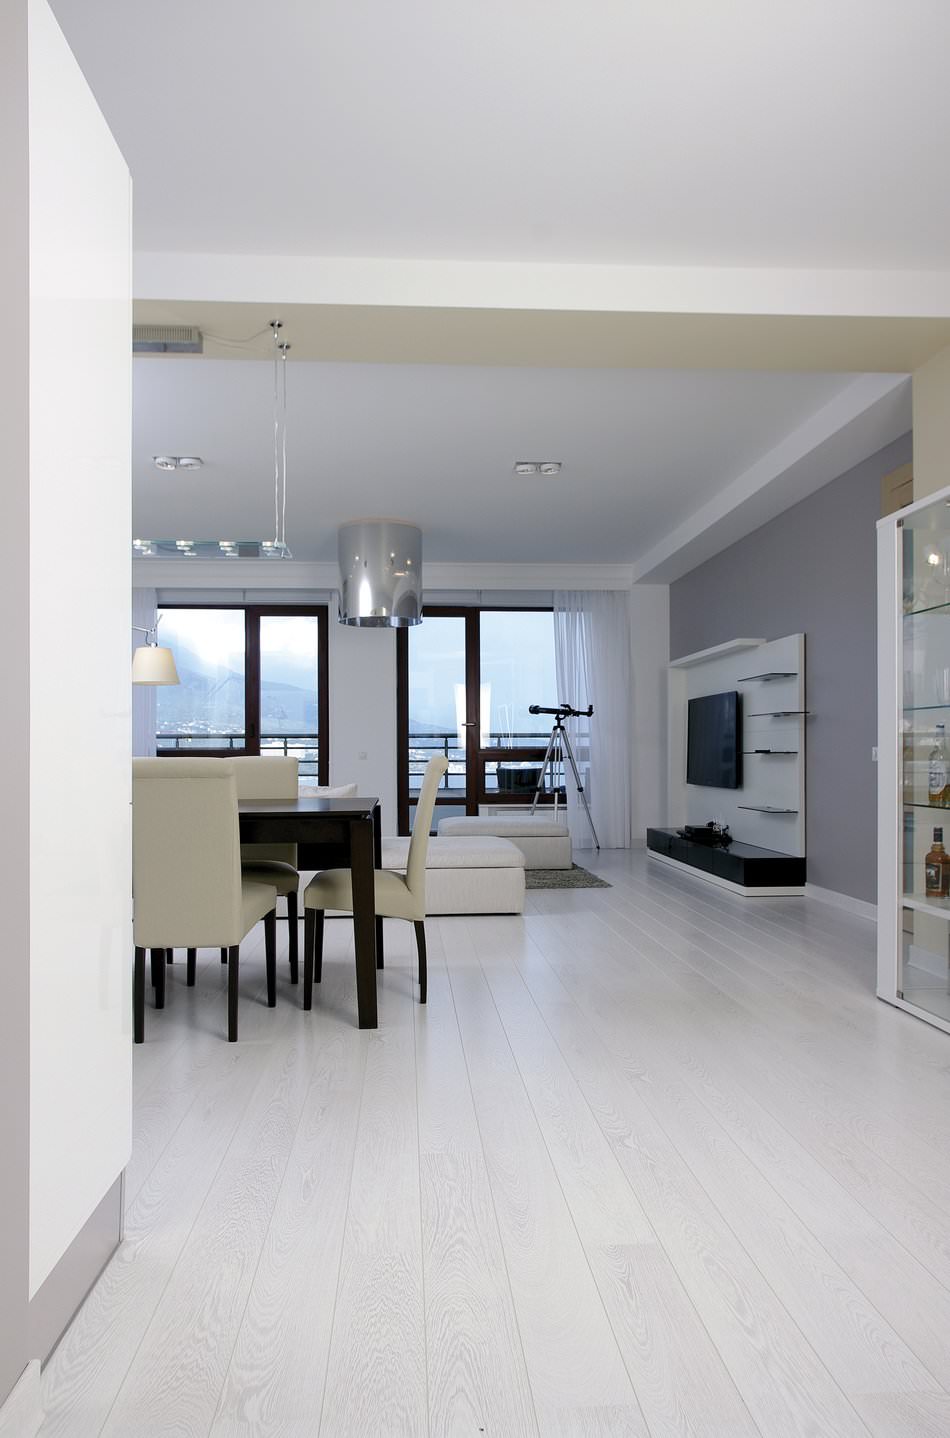 Moderní design interiéru bytu ve stylu minimalismu